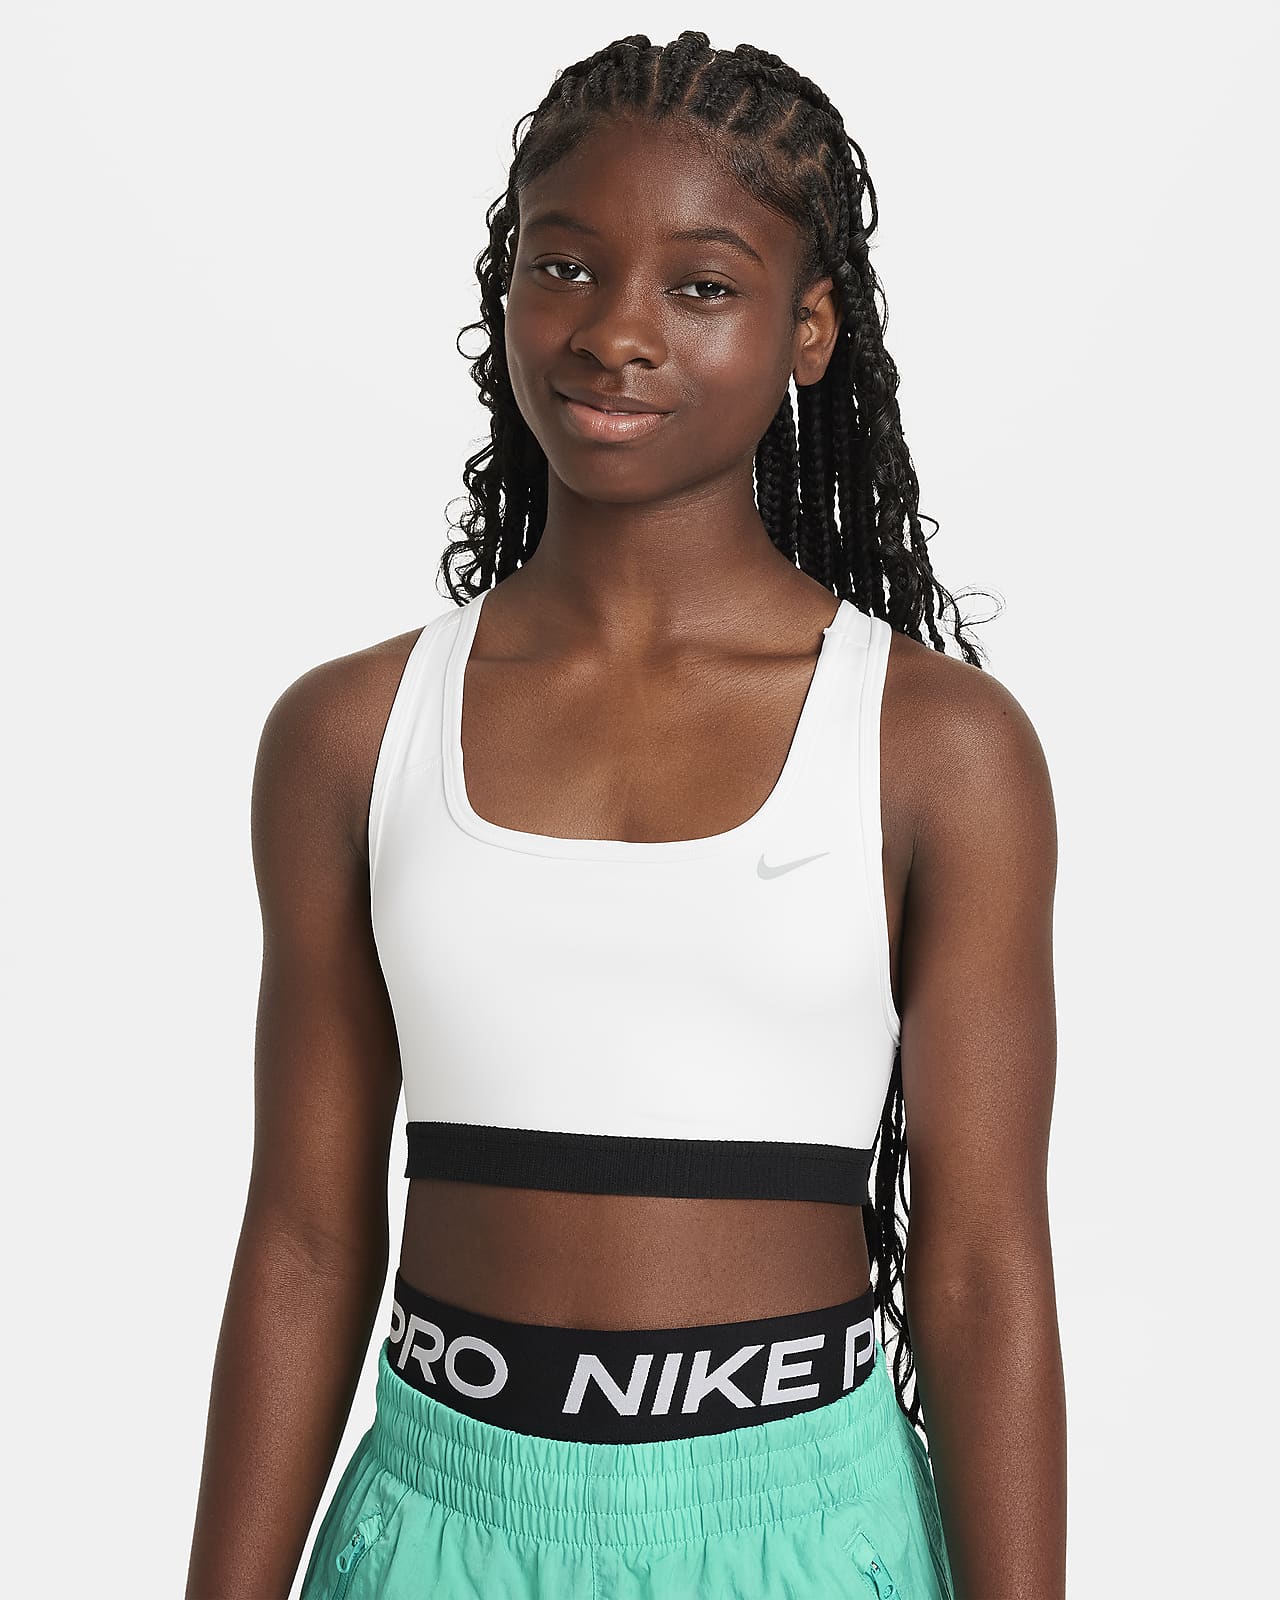 Girls XL Nike Pro Sports Bra  Sports bra pattern, Nike pro sports bra, Sports  bra